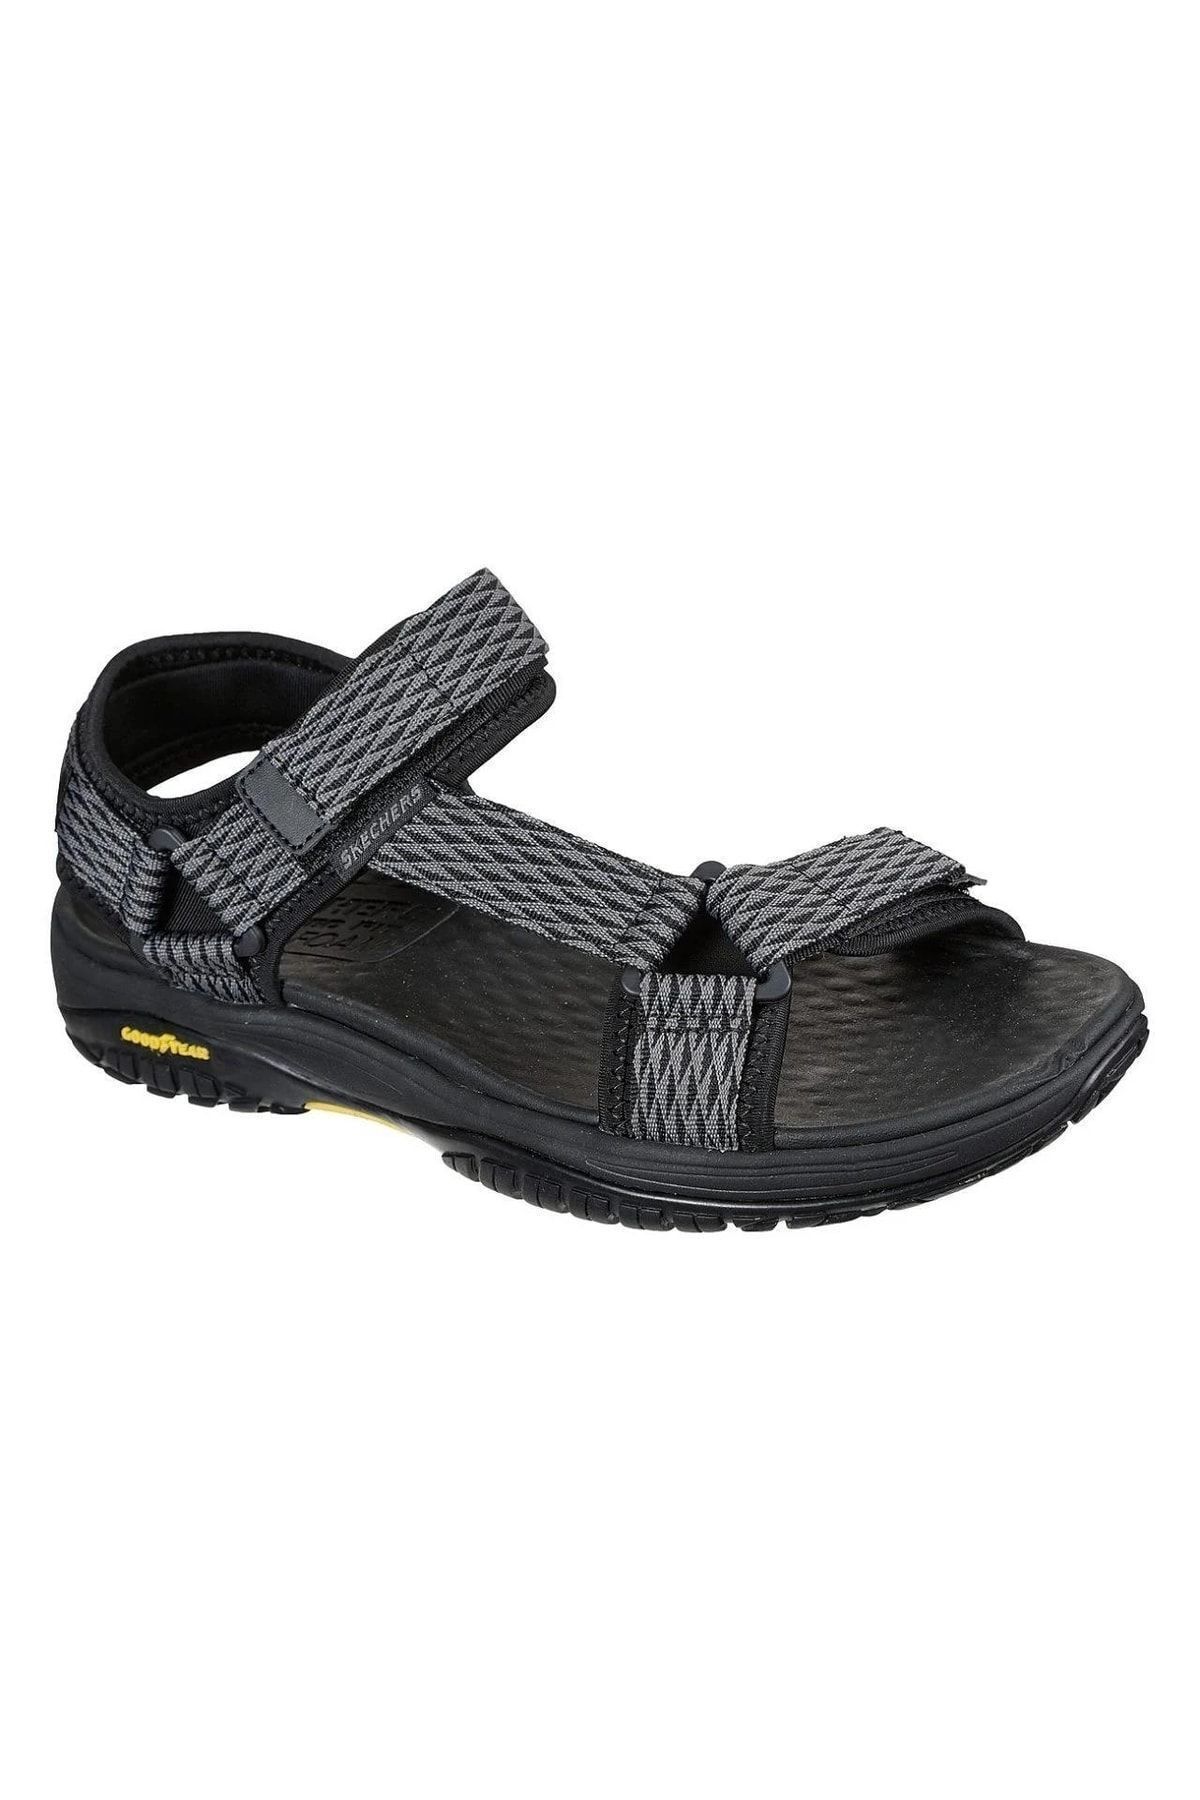 Skechers 204351 Bkgy Lomell - Rıp Tıde Spor Sandalet